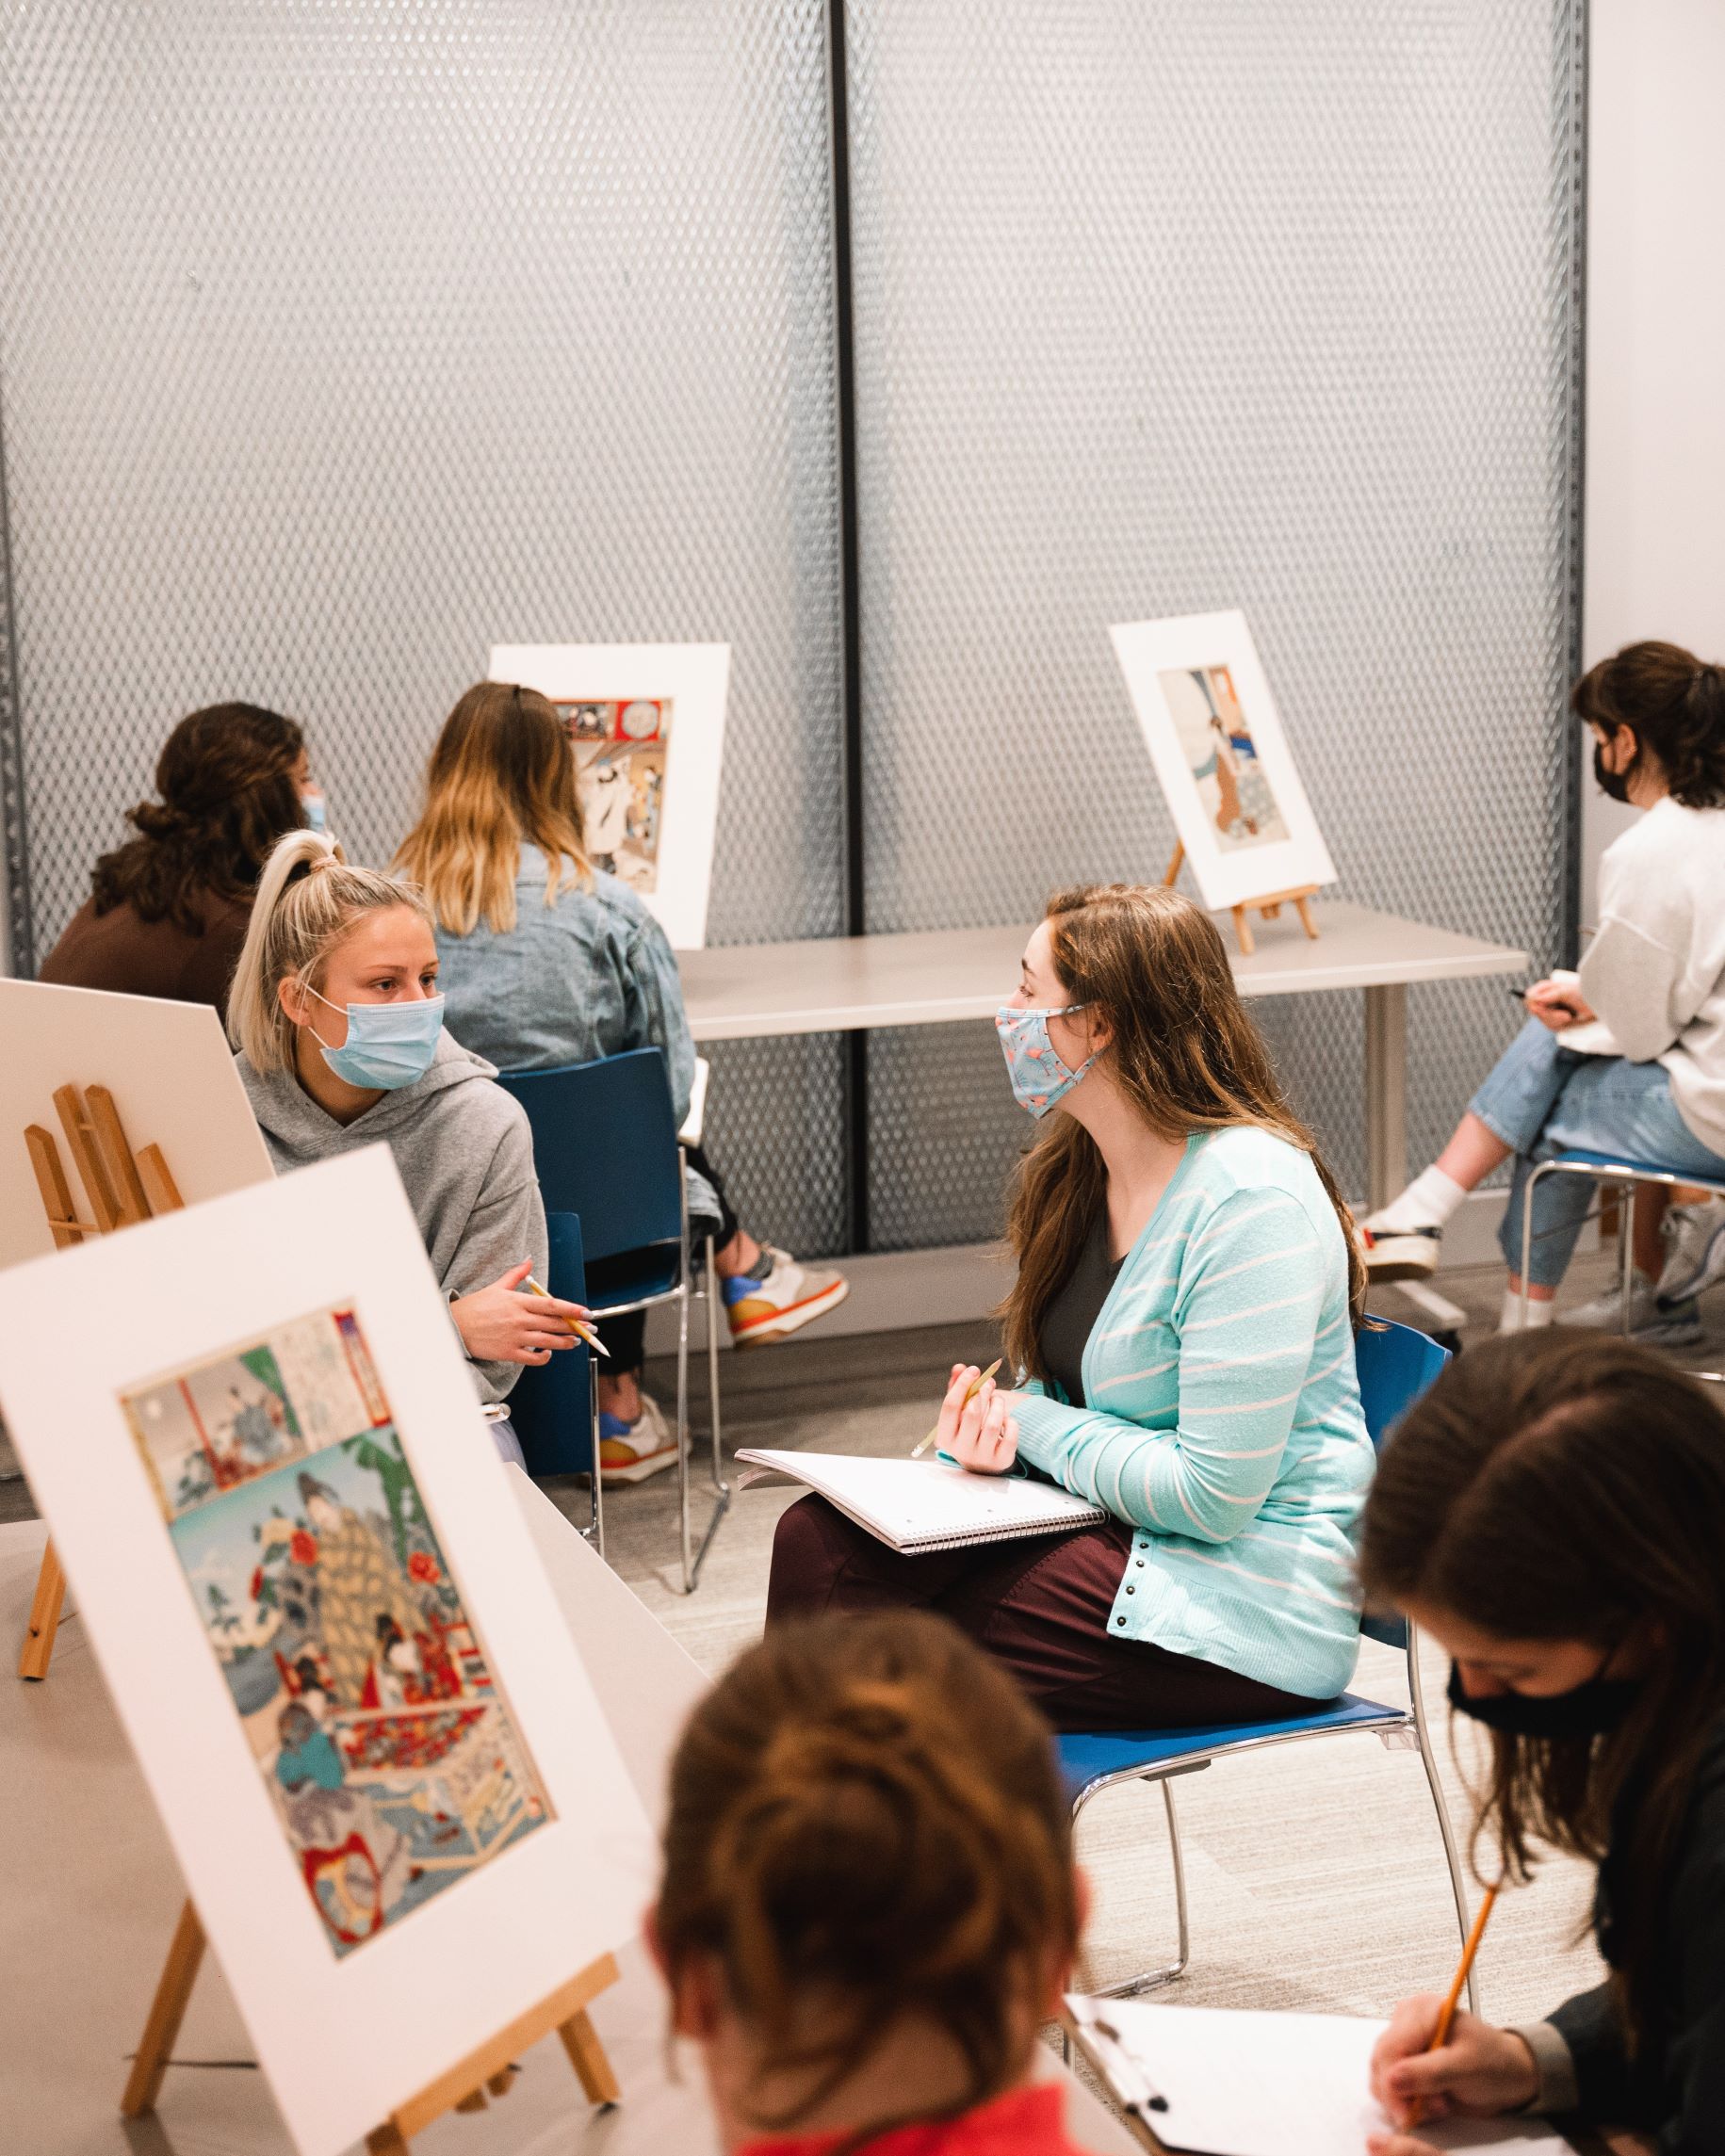 Art students looking at paintings